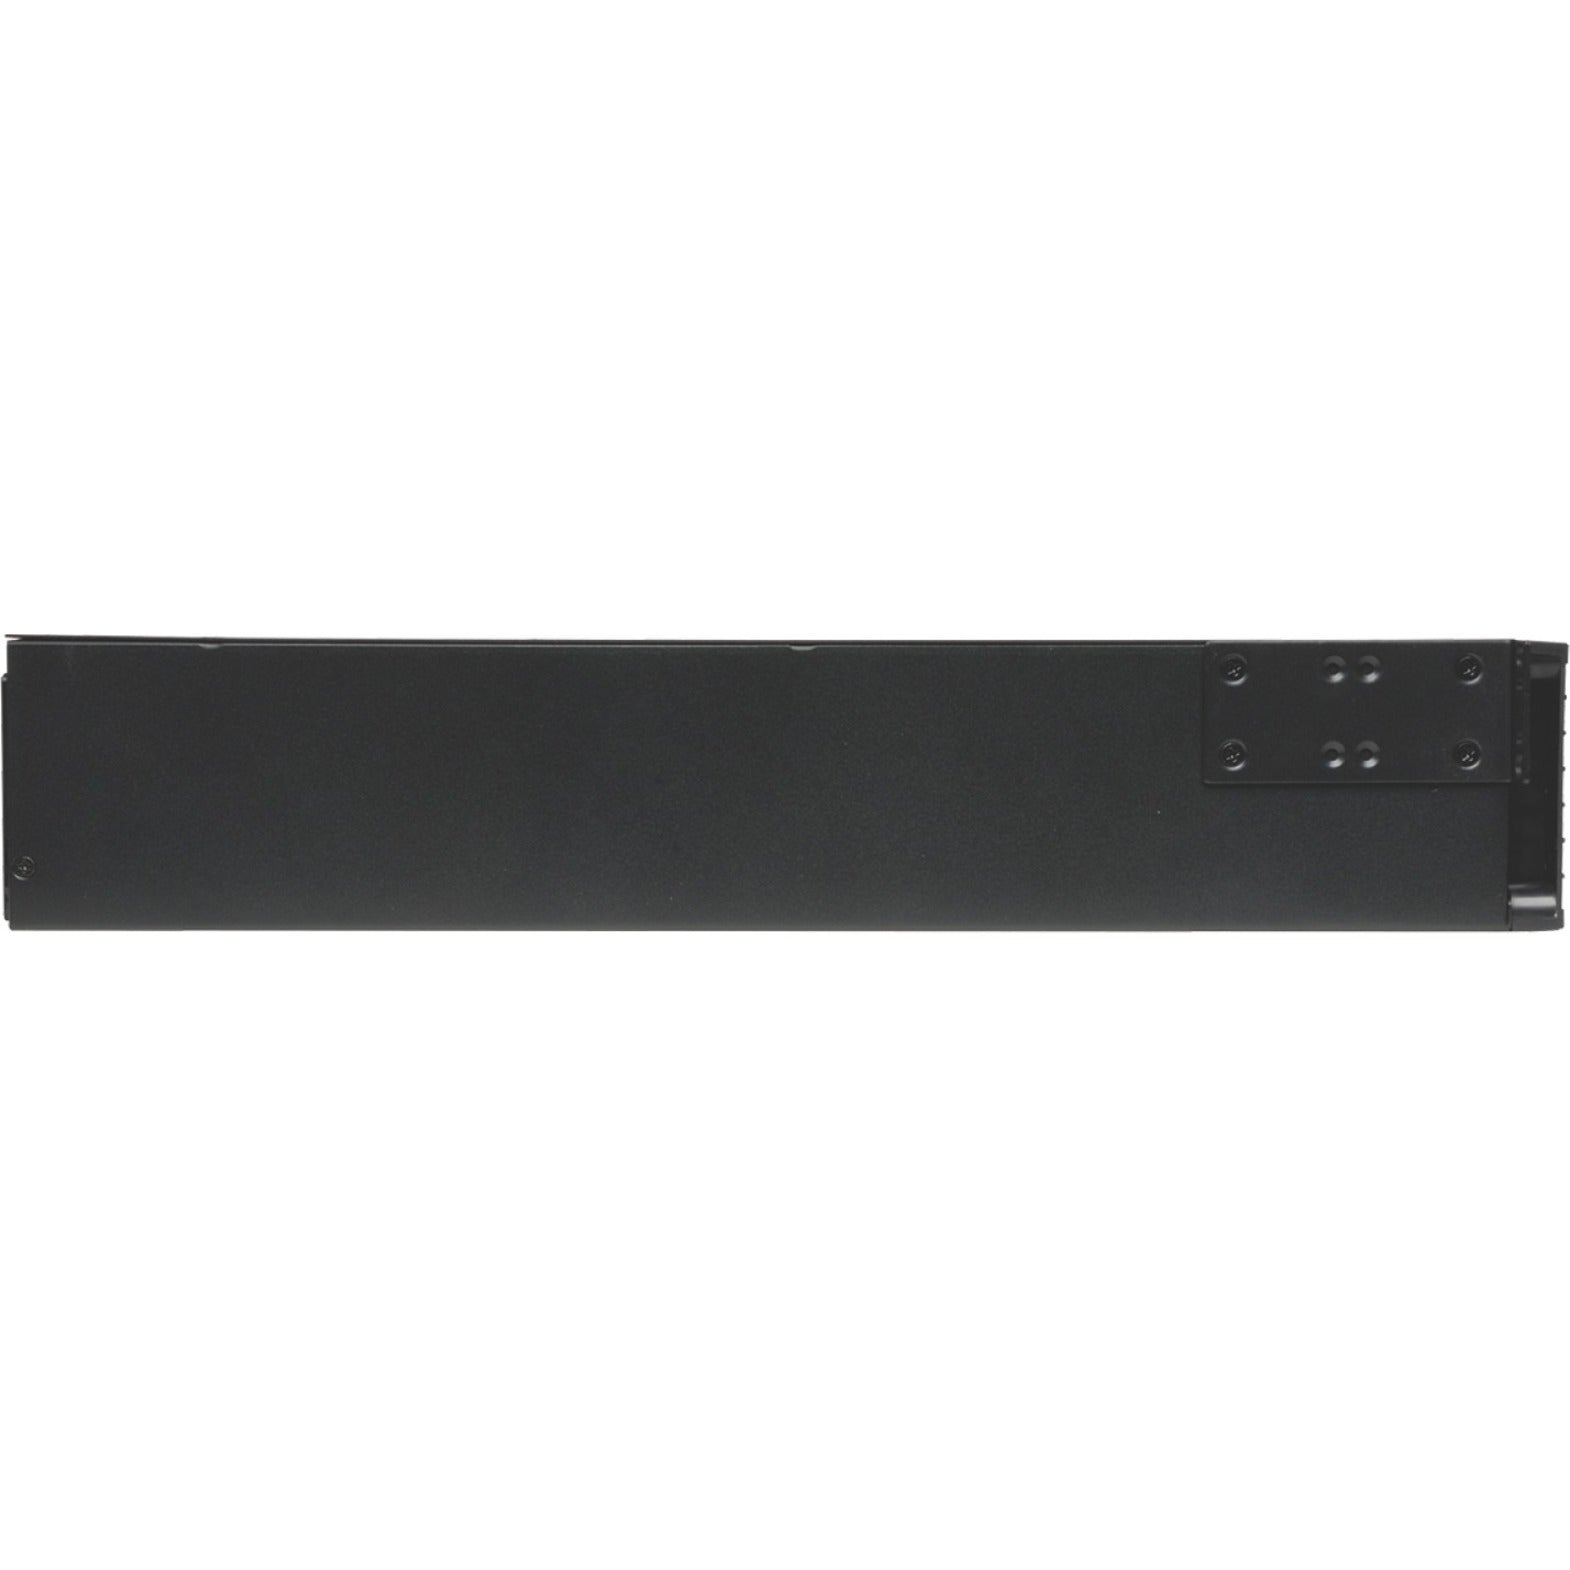 Tripp Lite UPS Smart Online 1500VA 1350W Rackmount 120V LCD USB DB9 Preinstalled SNMPWEBCARD 2URM (SU1500RTXLCDN) Right image